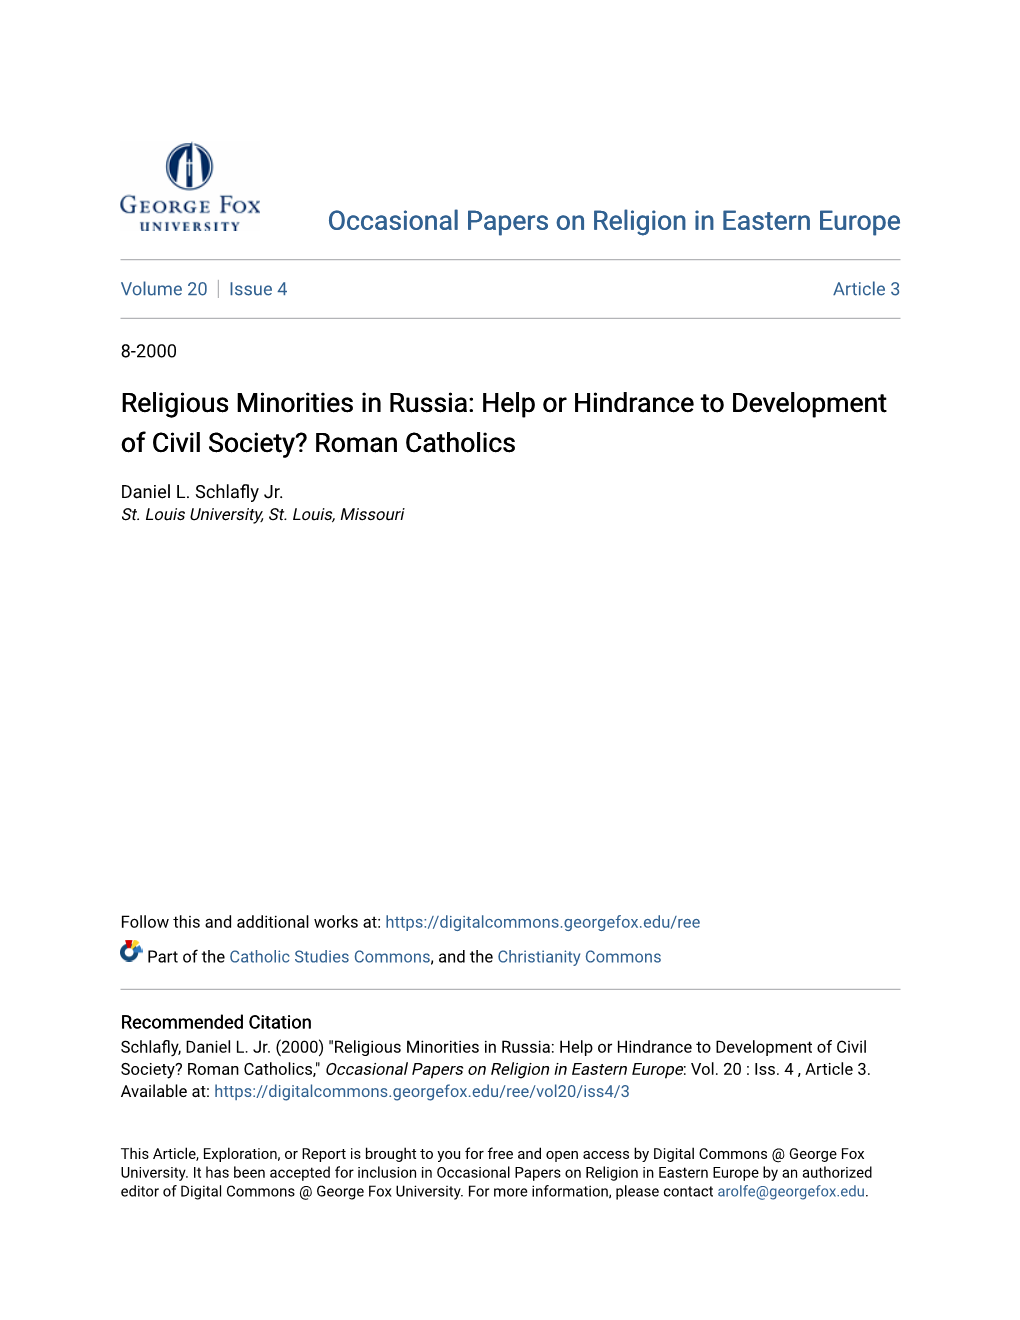 Help Or Hindrance to Development of Civil Society? Roman Catholics